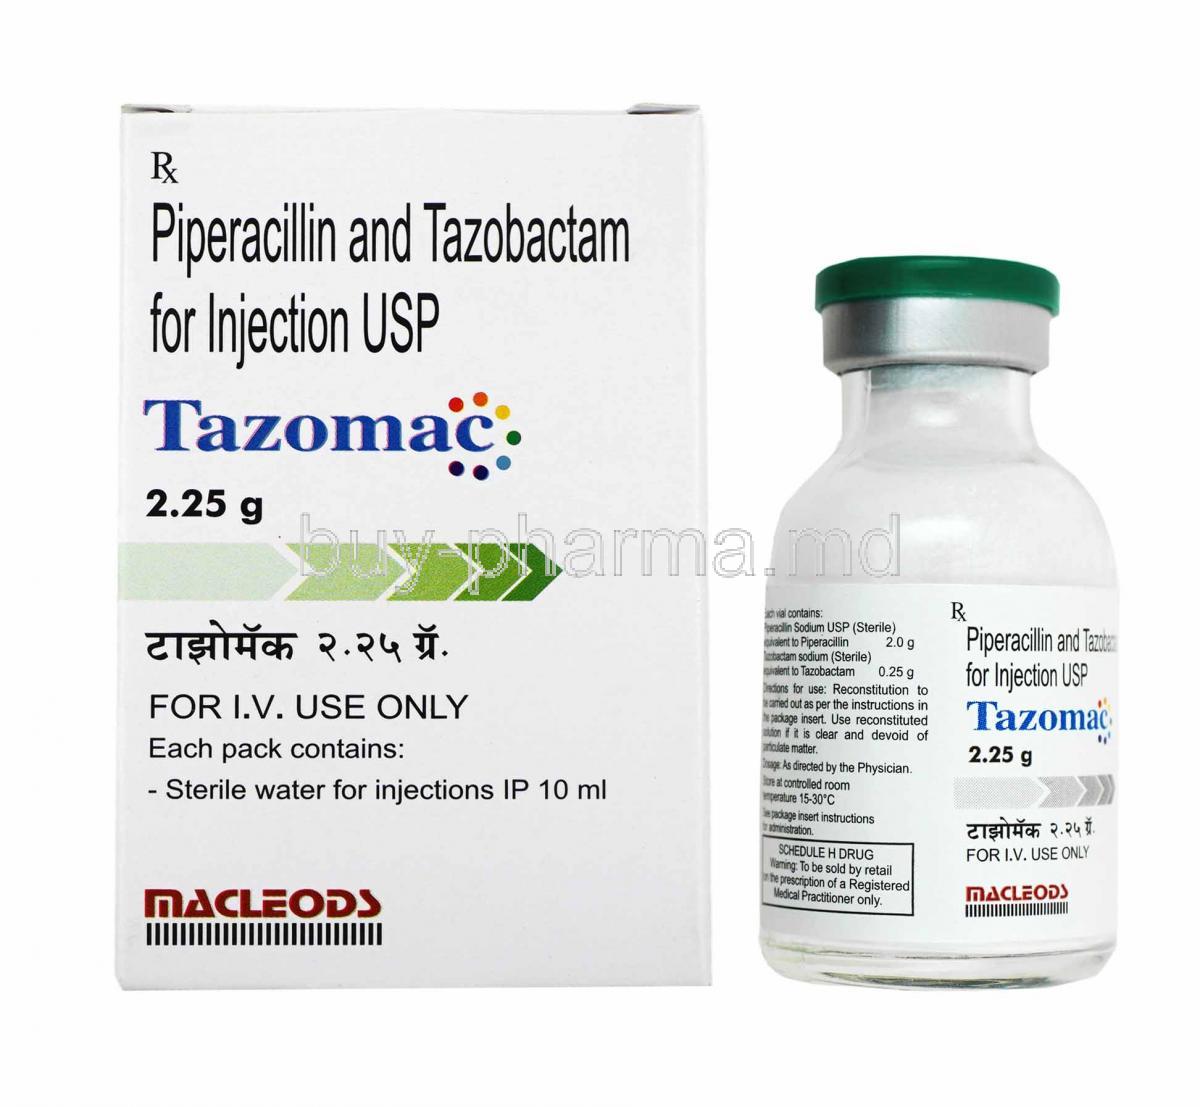 Tazomac Injectionicon, Piperacillin and Tazobactum 2.25g box and vial